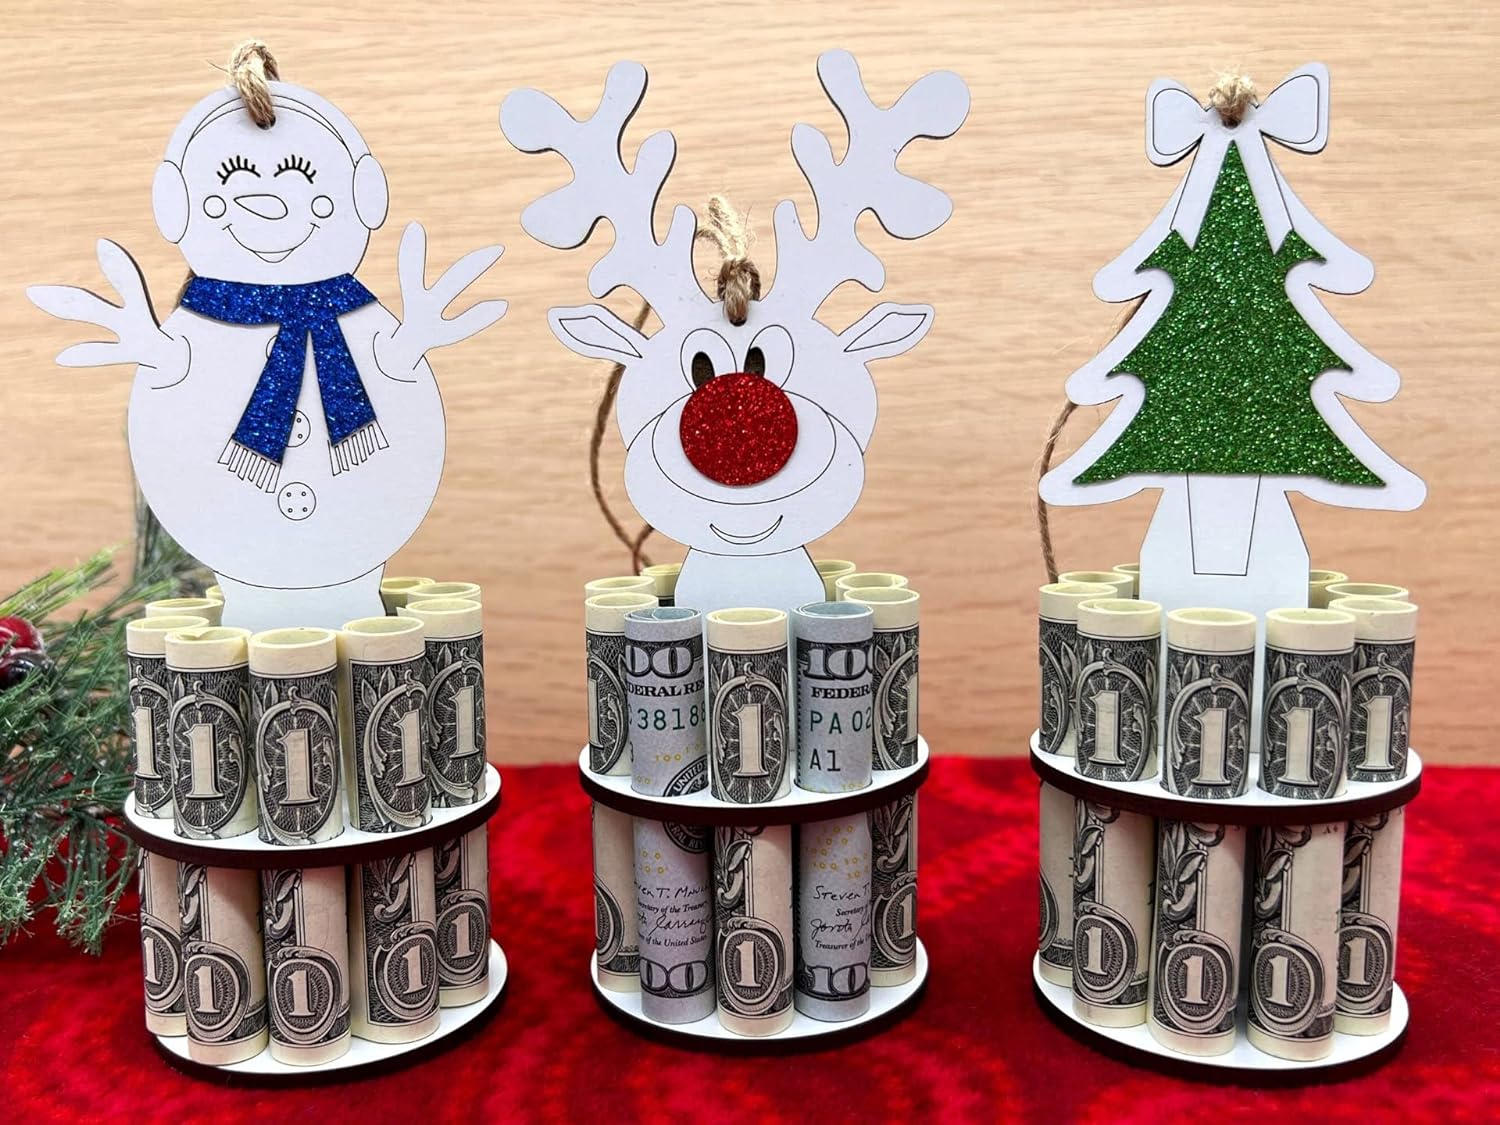 Wooden Christmas Unique Money Holder for Cash Money Gift Holder Ornaments Reindeer Snowman Christmas Tree Desktop Hanging pendant